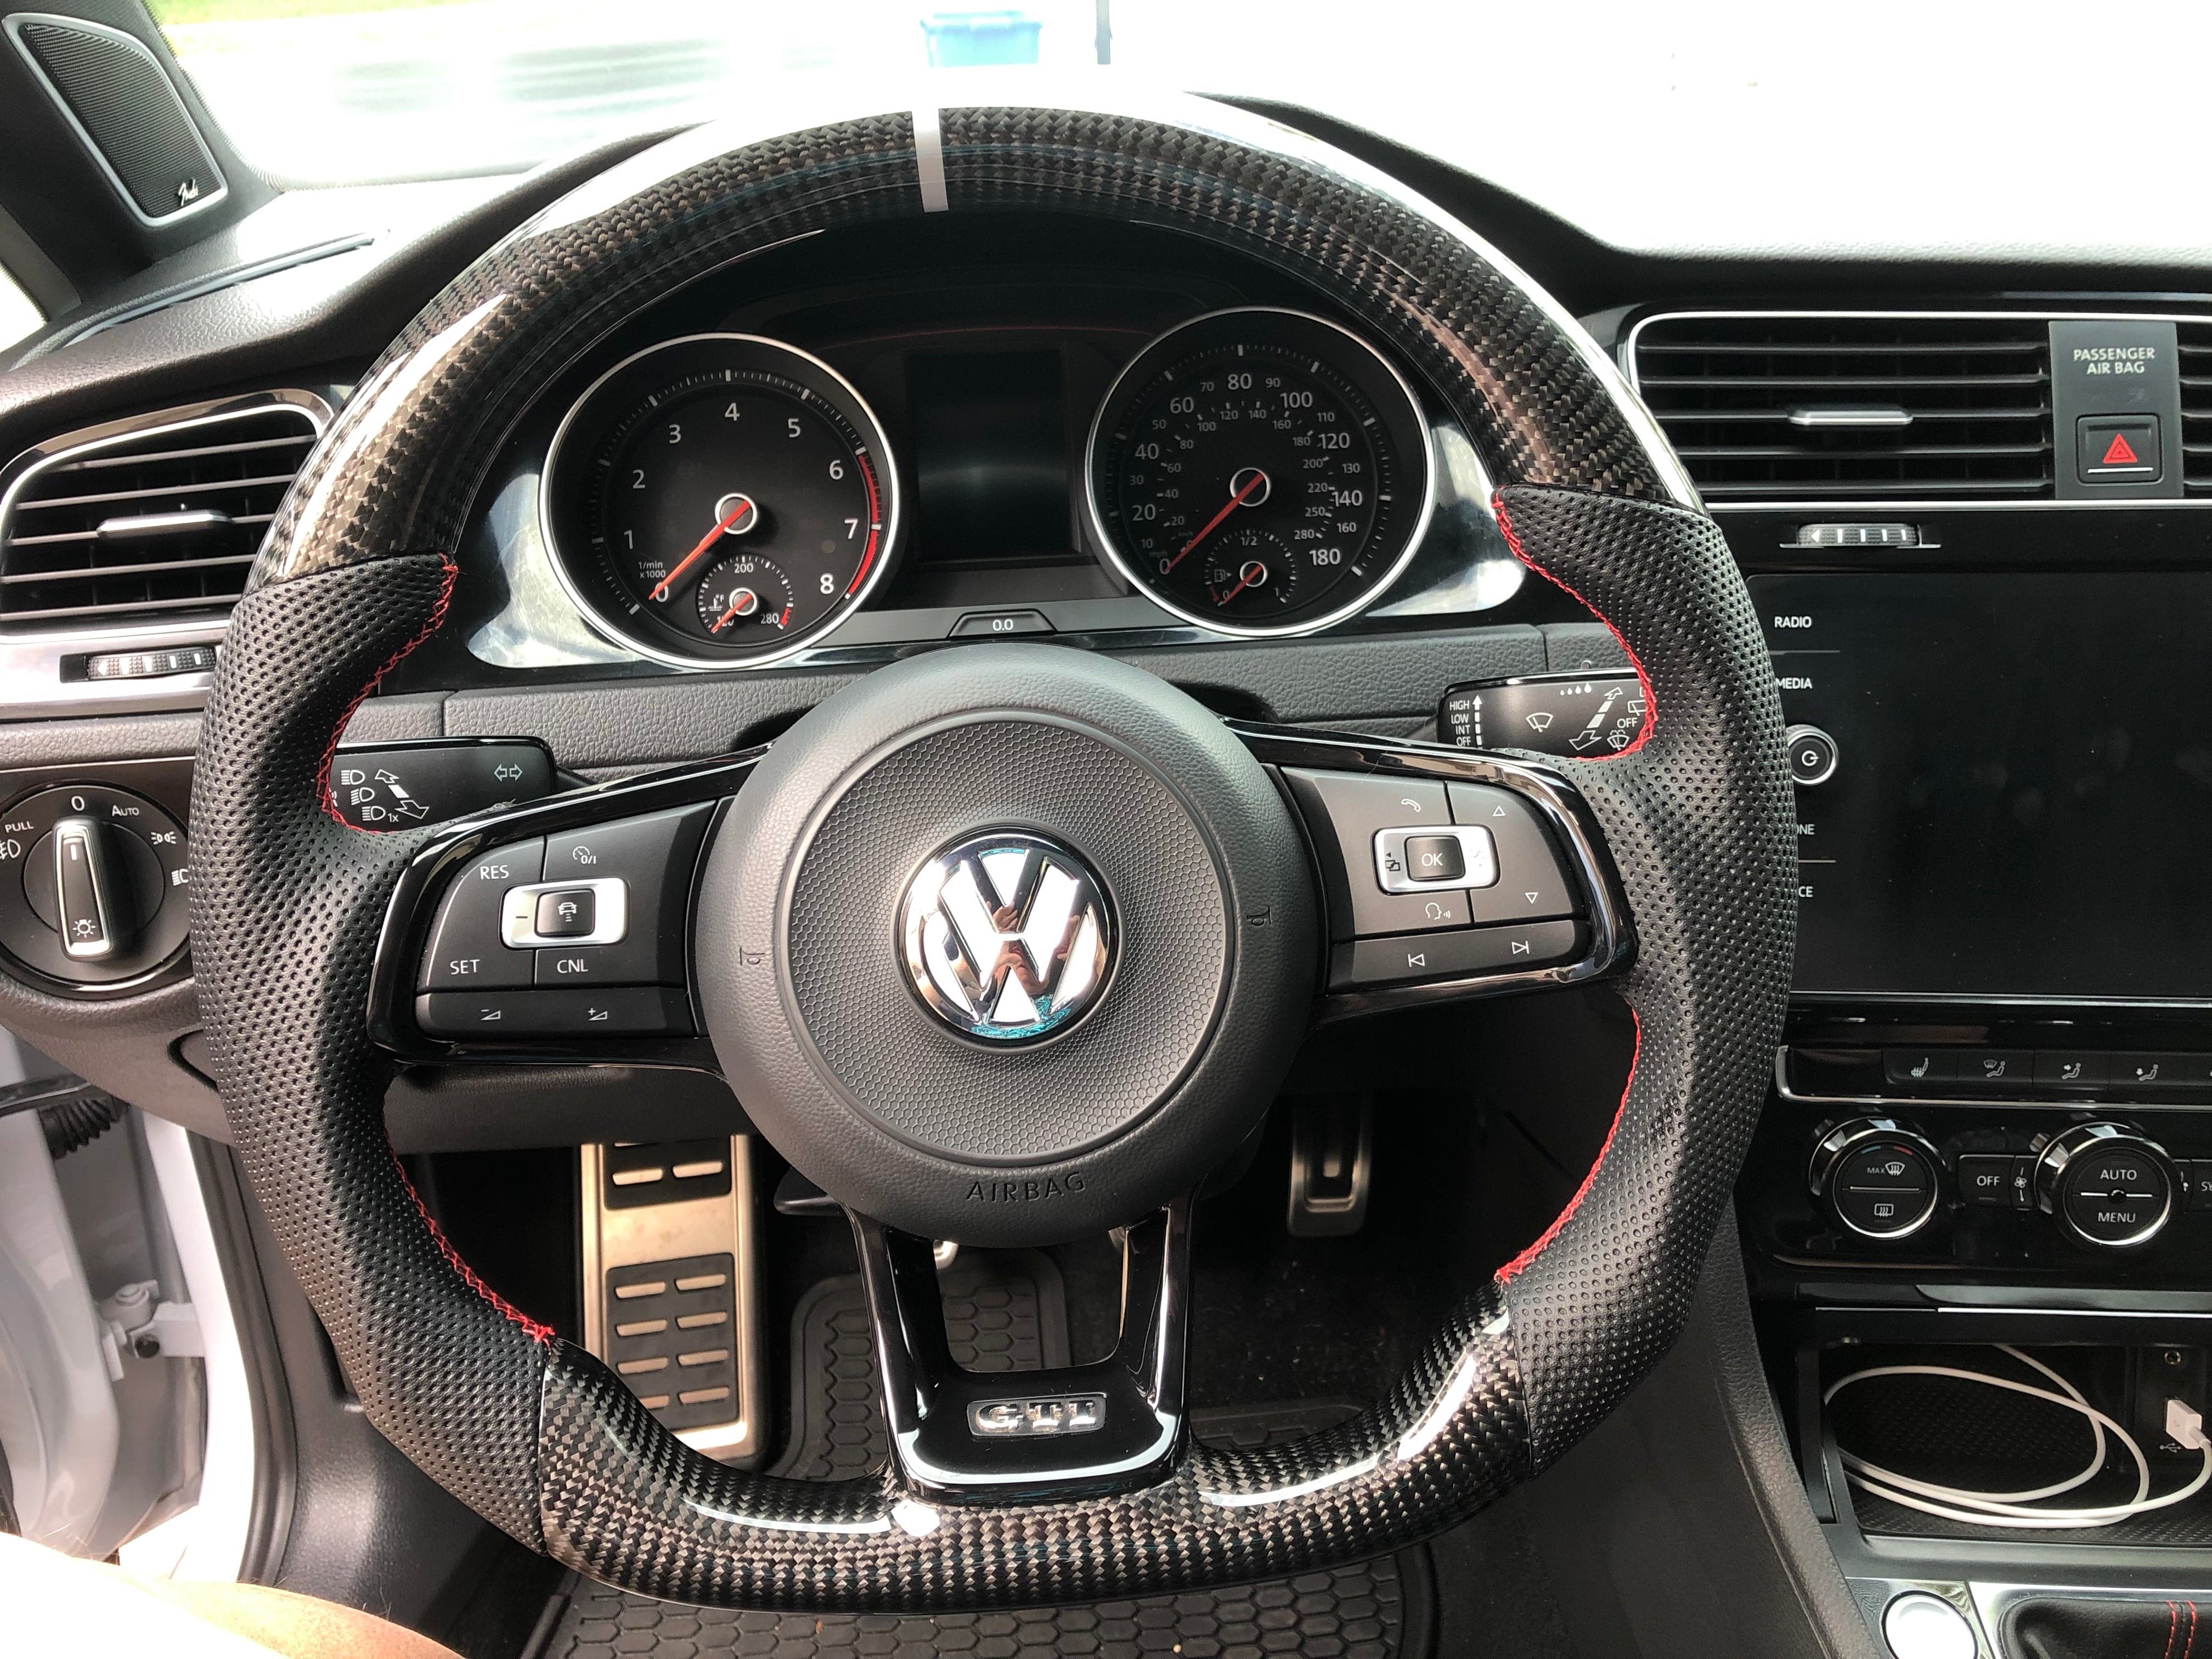 EZT Carbon Fiber-Perforated Steering Wheel (VW MK7/MK7.5